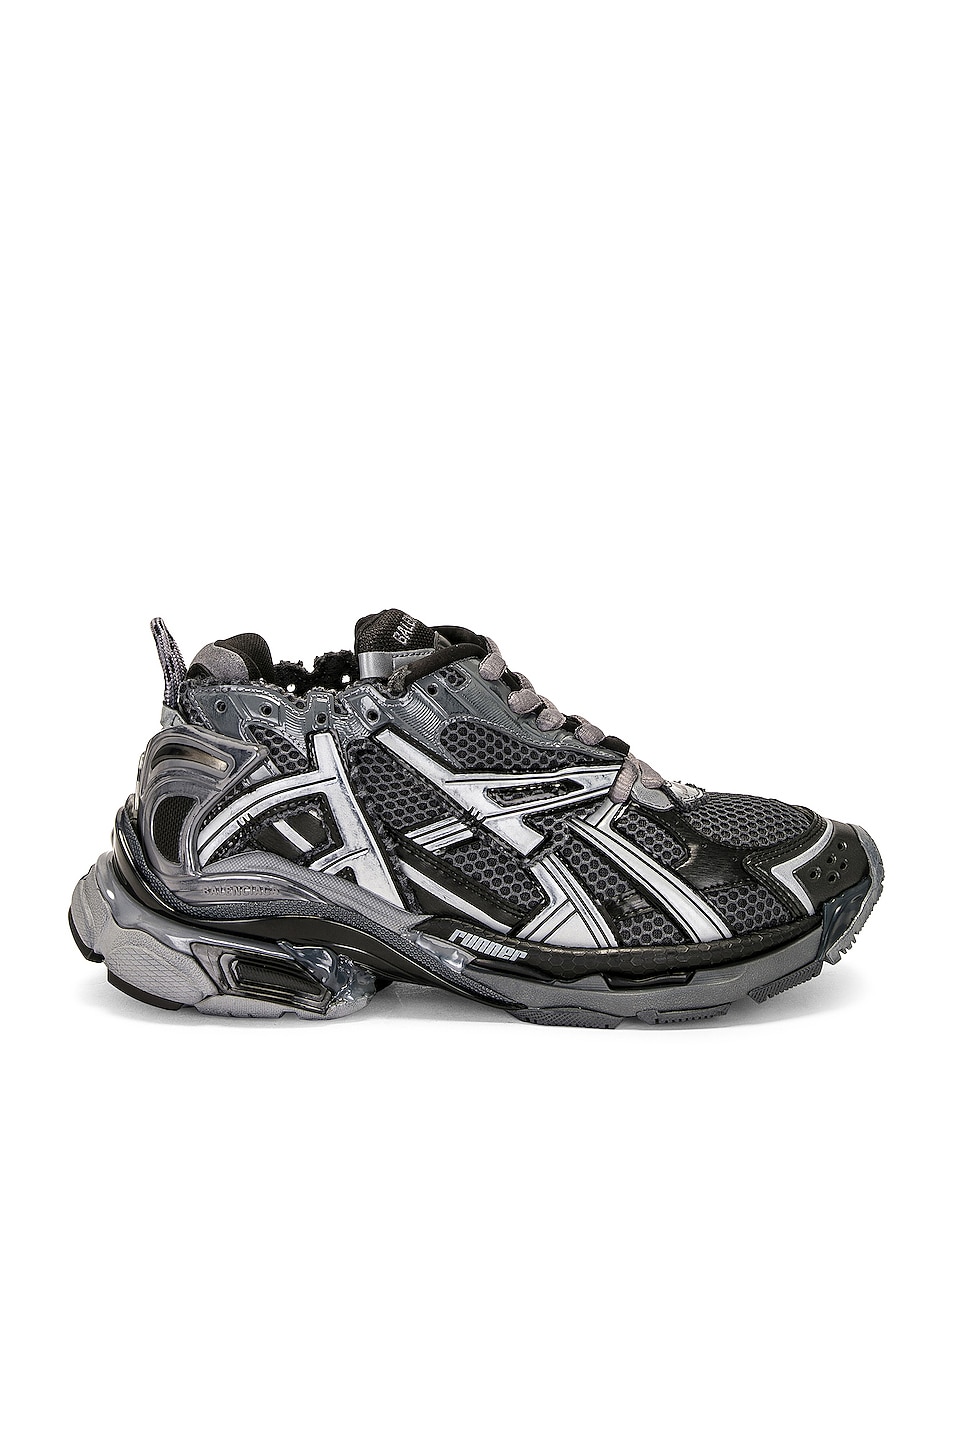 Balenciaga Runner Sneaker in Dark Grey & Black | FWRD